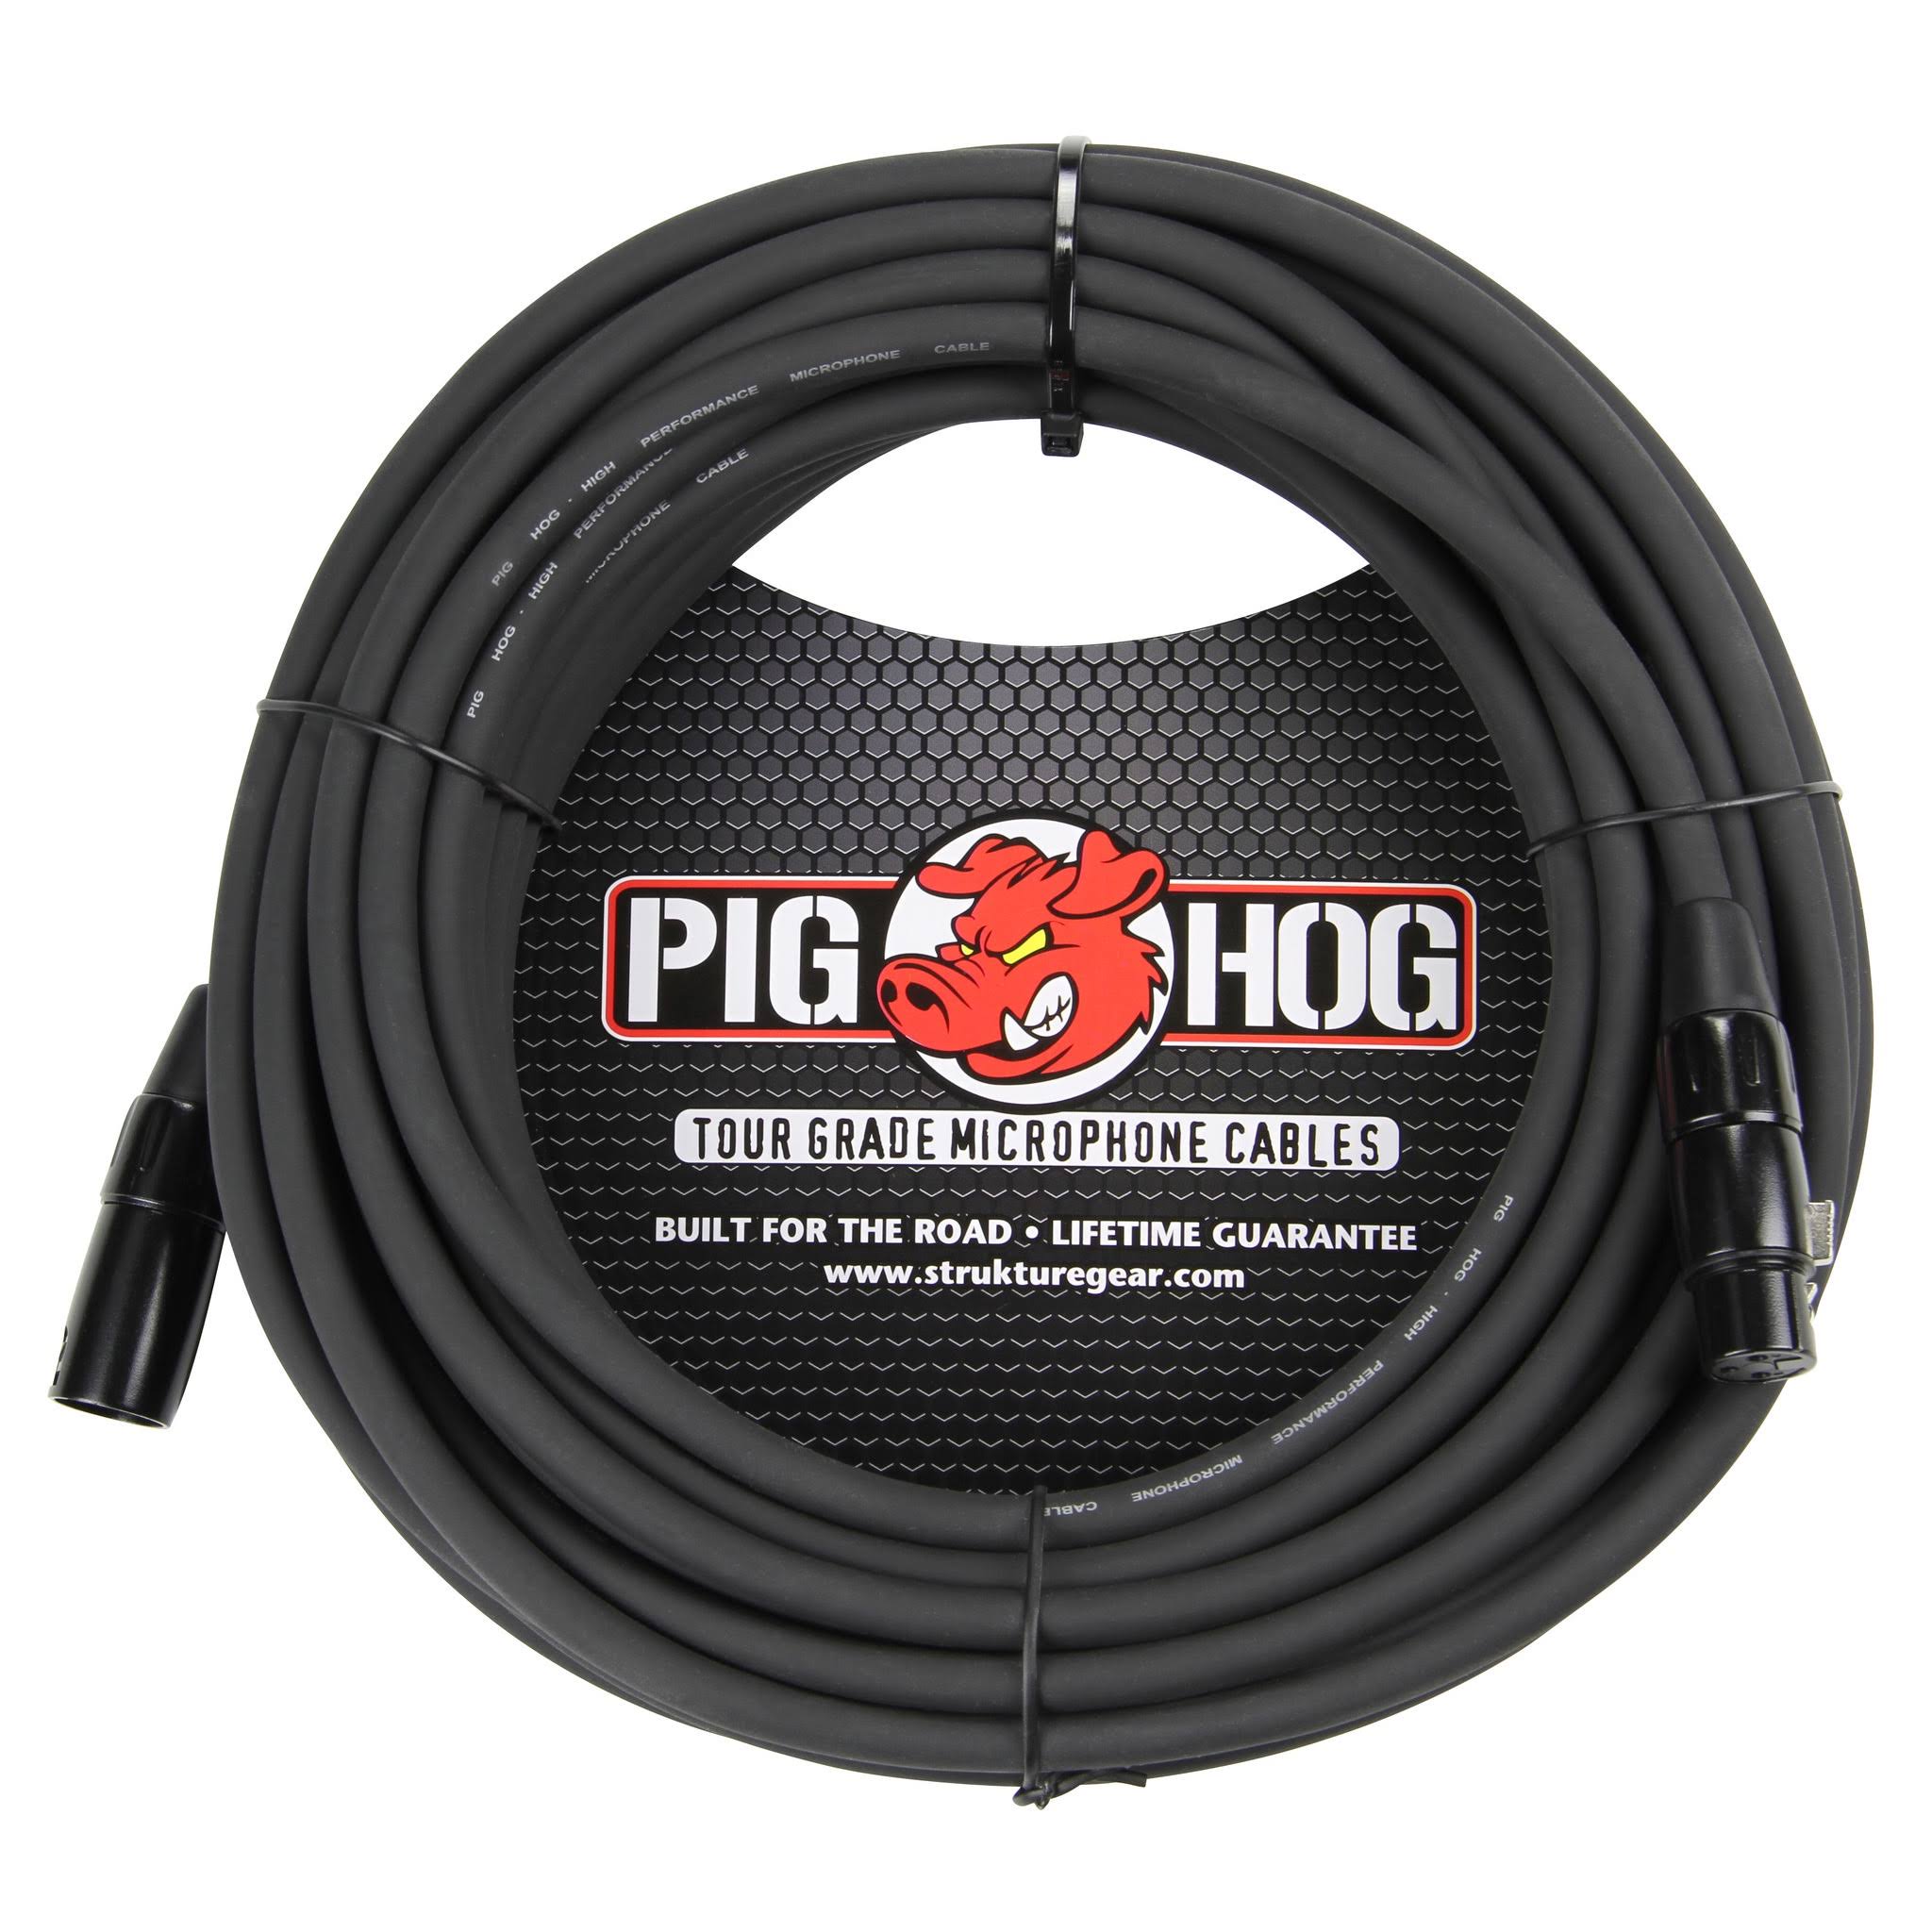 Pig Hog High Performance Xlr Microphone Cable - Black, 50'